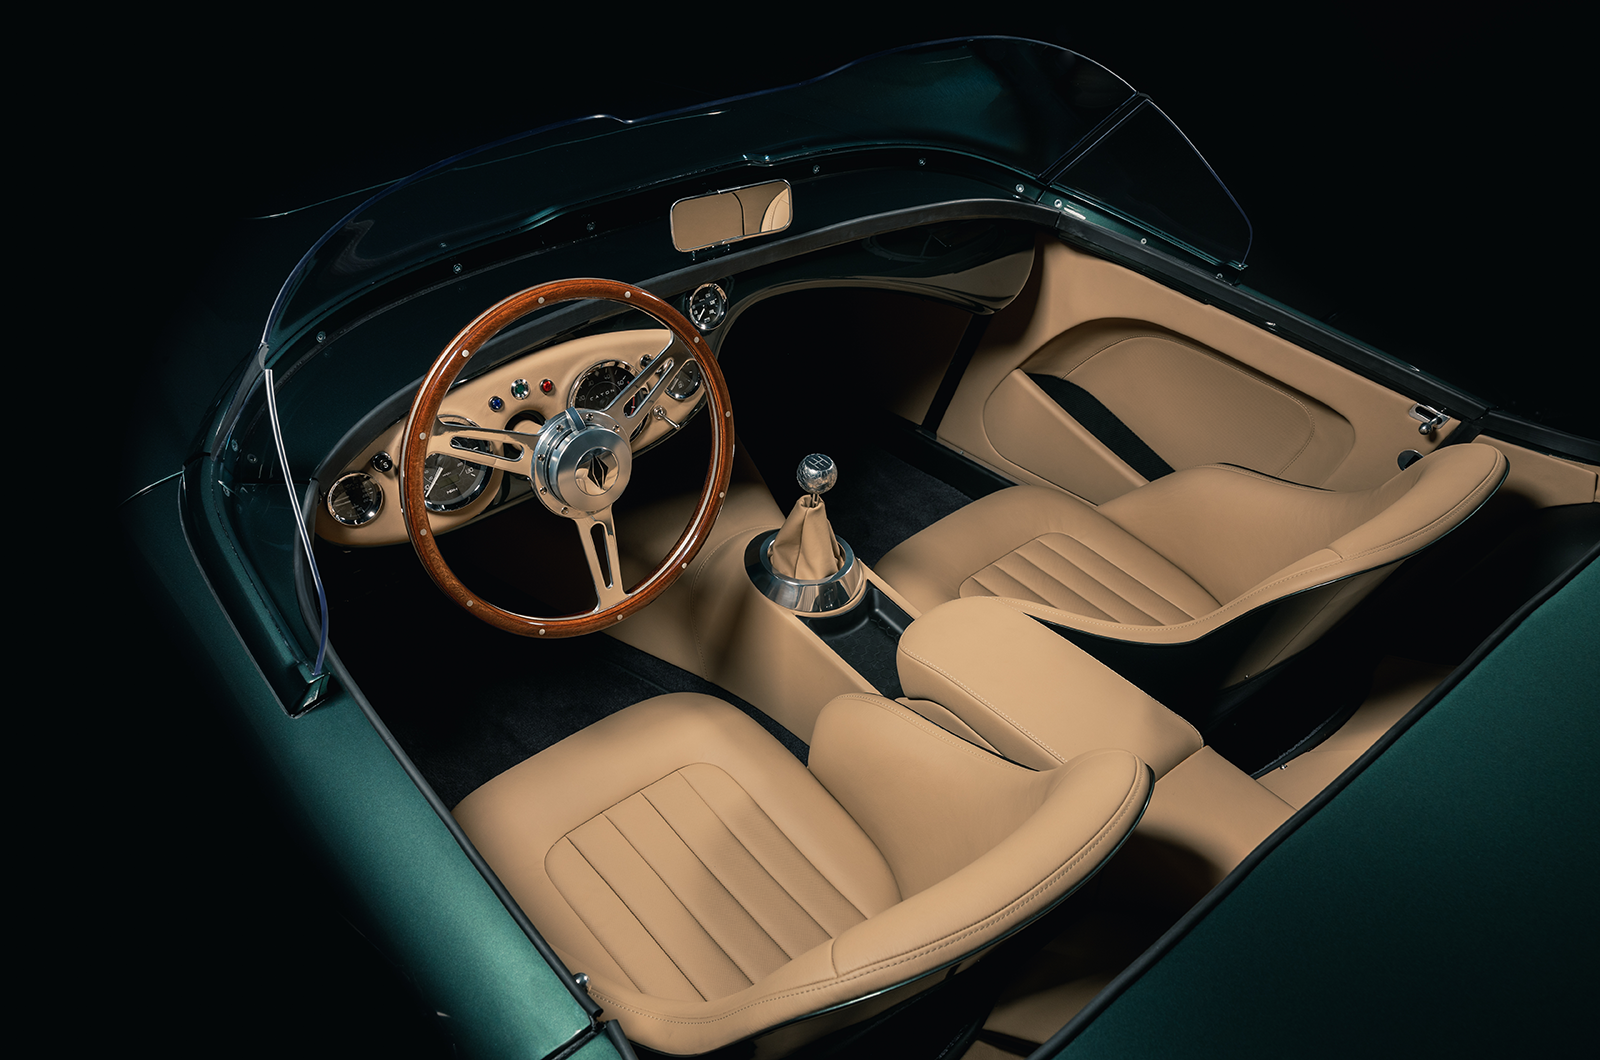 Classic & Sports Car – Classic Austin-Healey 100 reborn